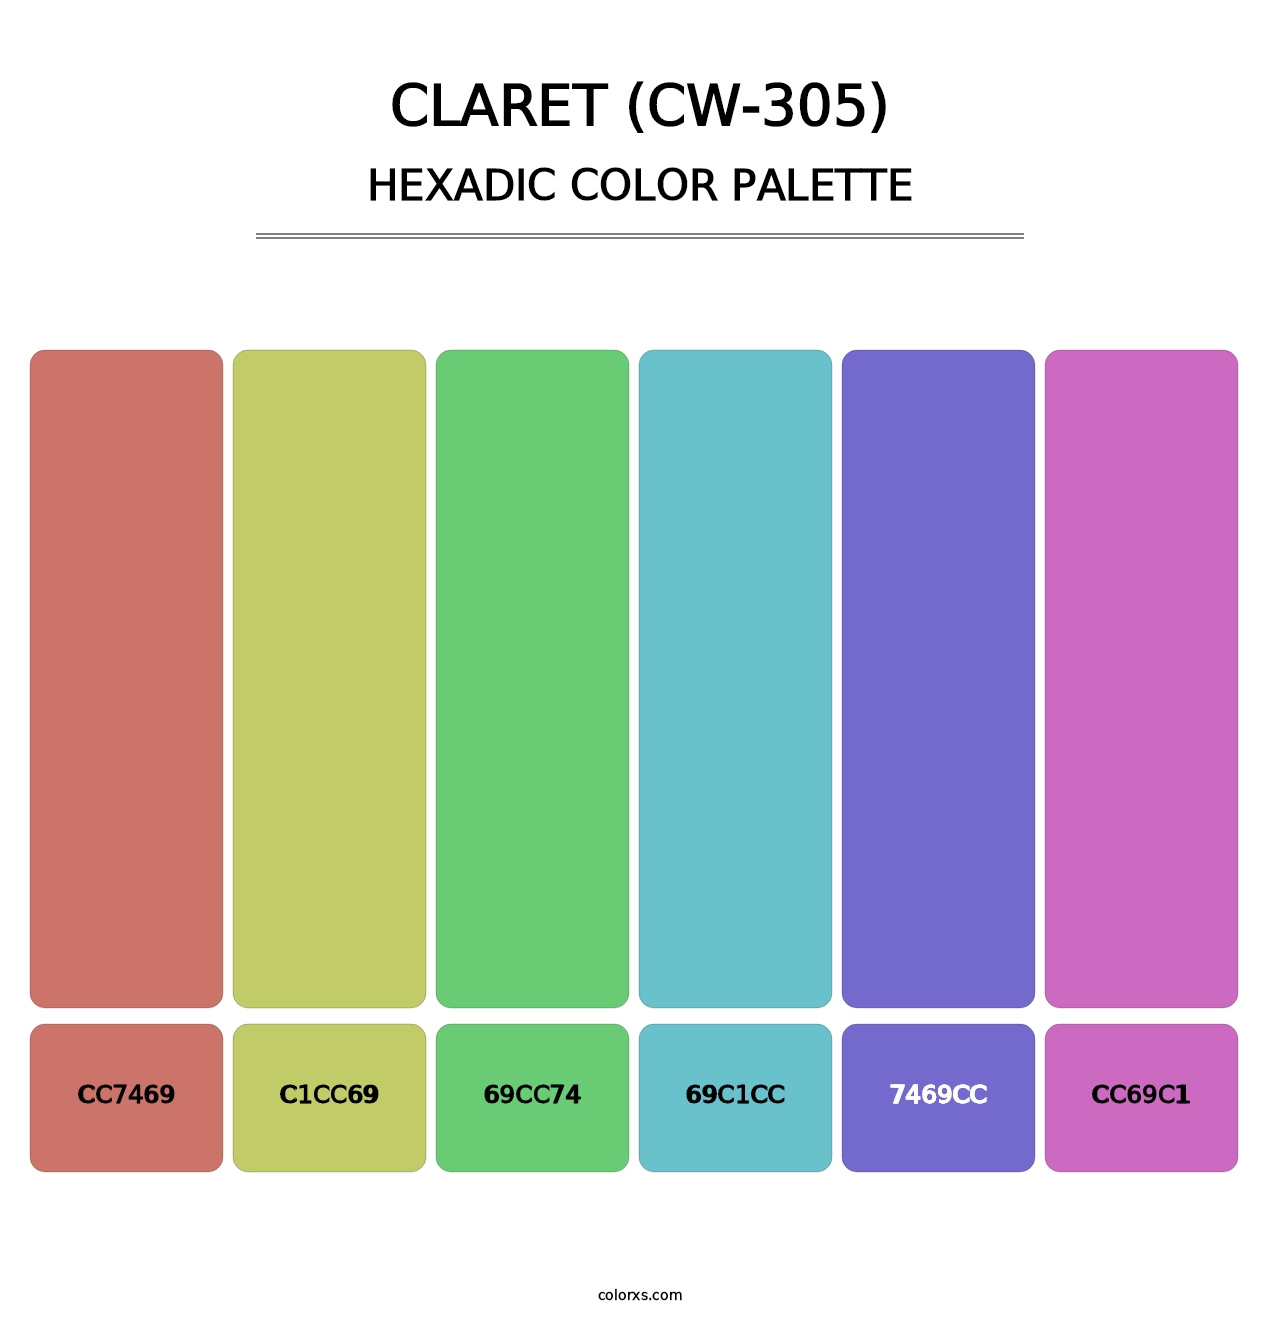 Claret (CW-305) - Hexadic Color Palette